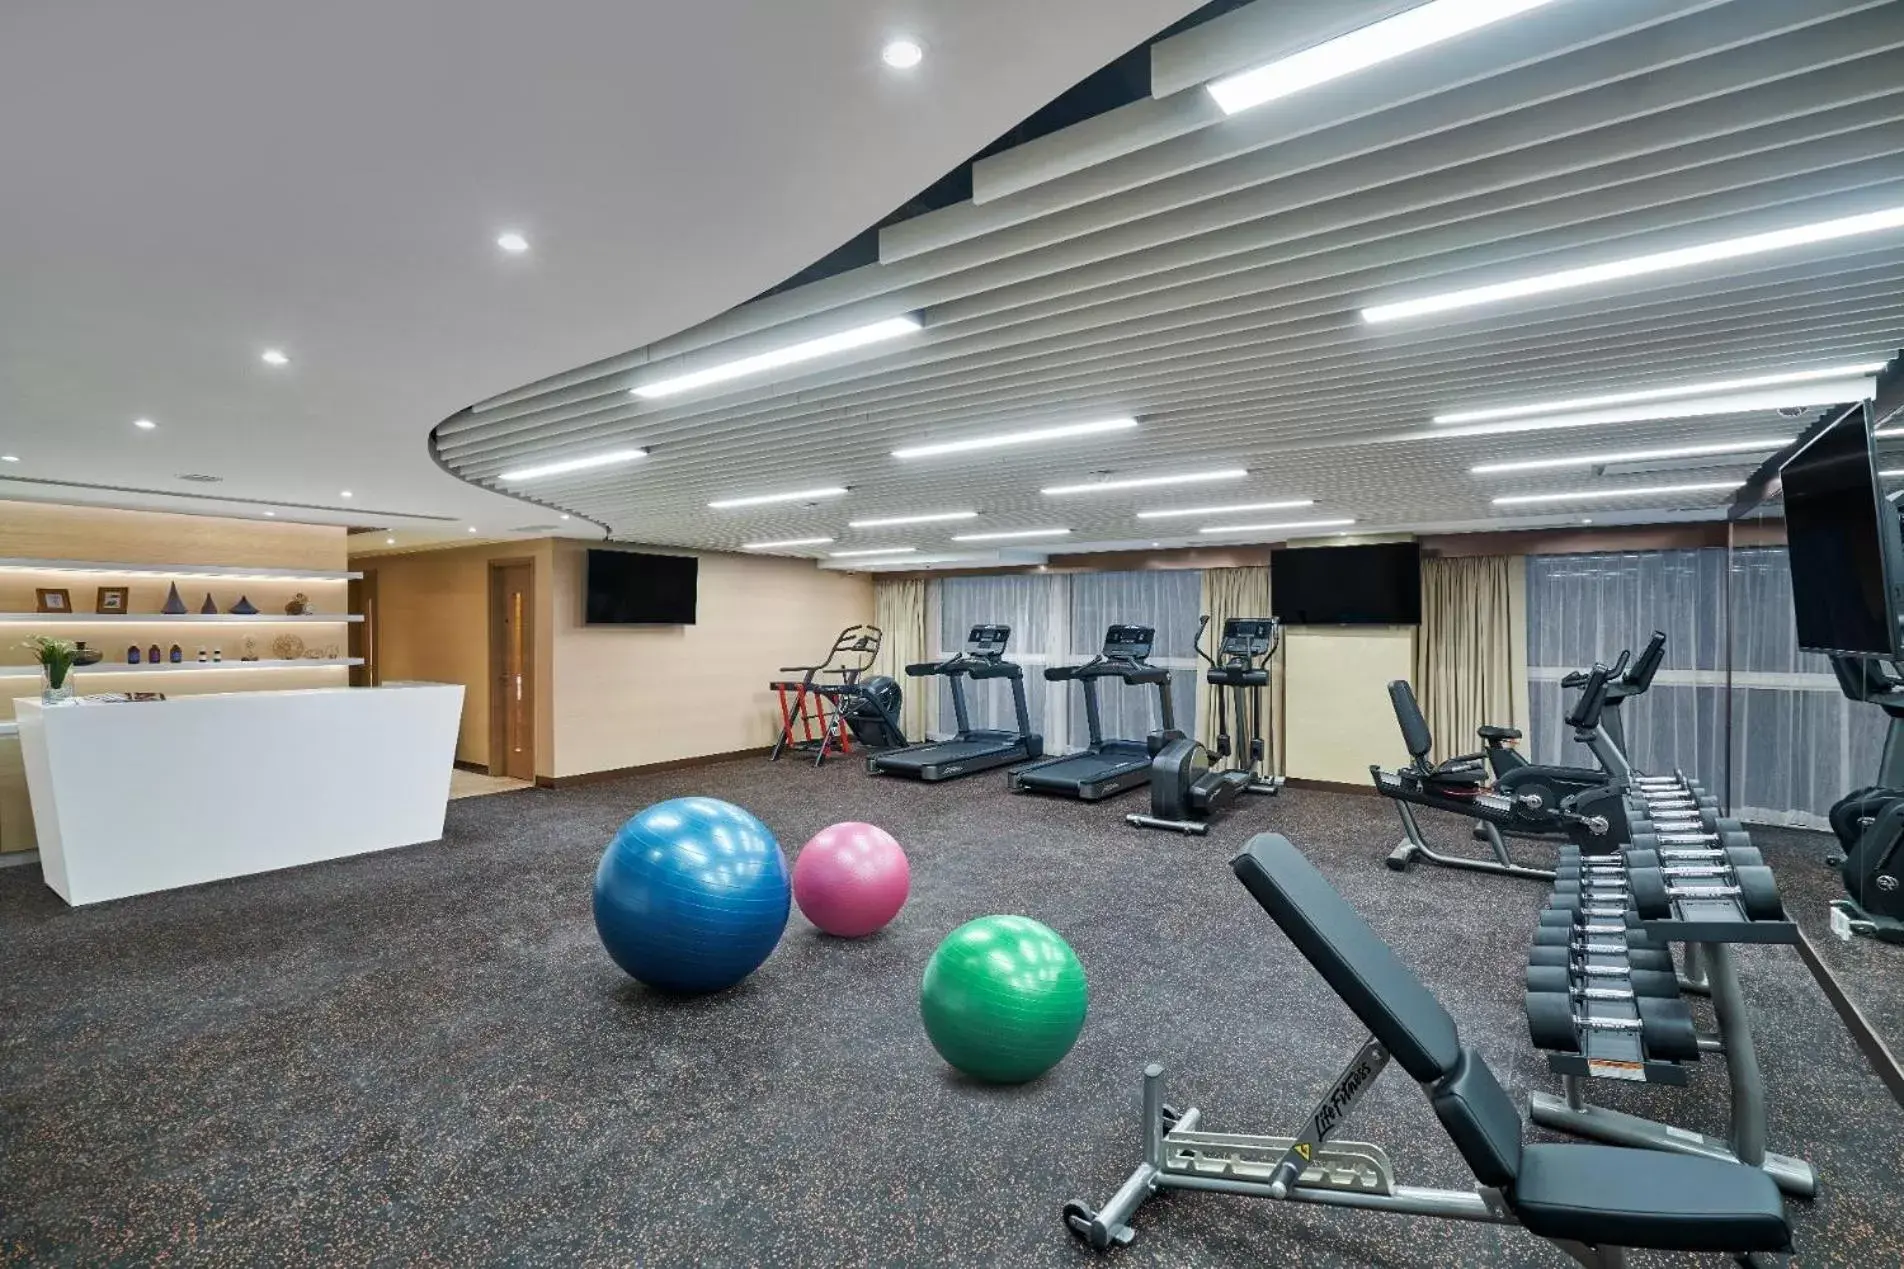 Fitness centre/facilities, Fitness Center/Facilities in Hotel COZi Resort Tuen Mun